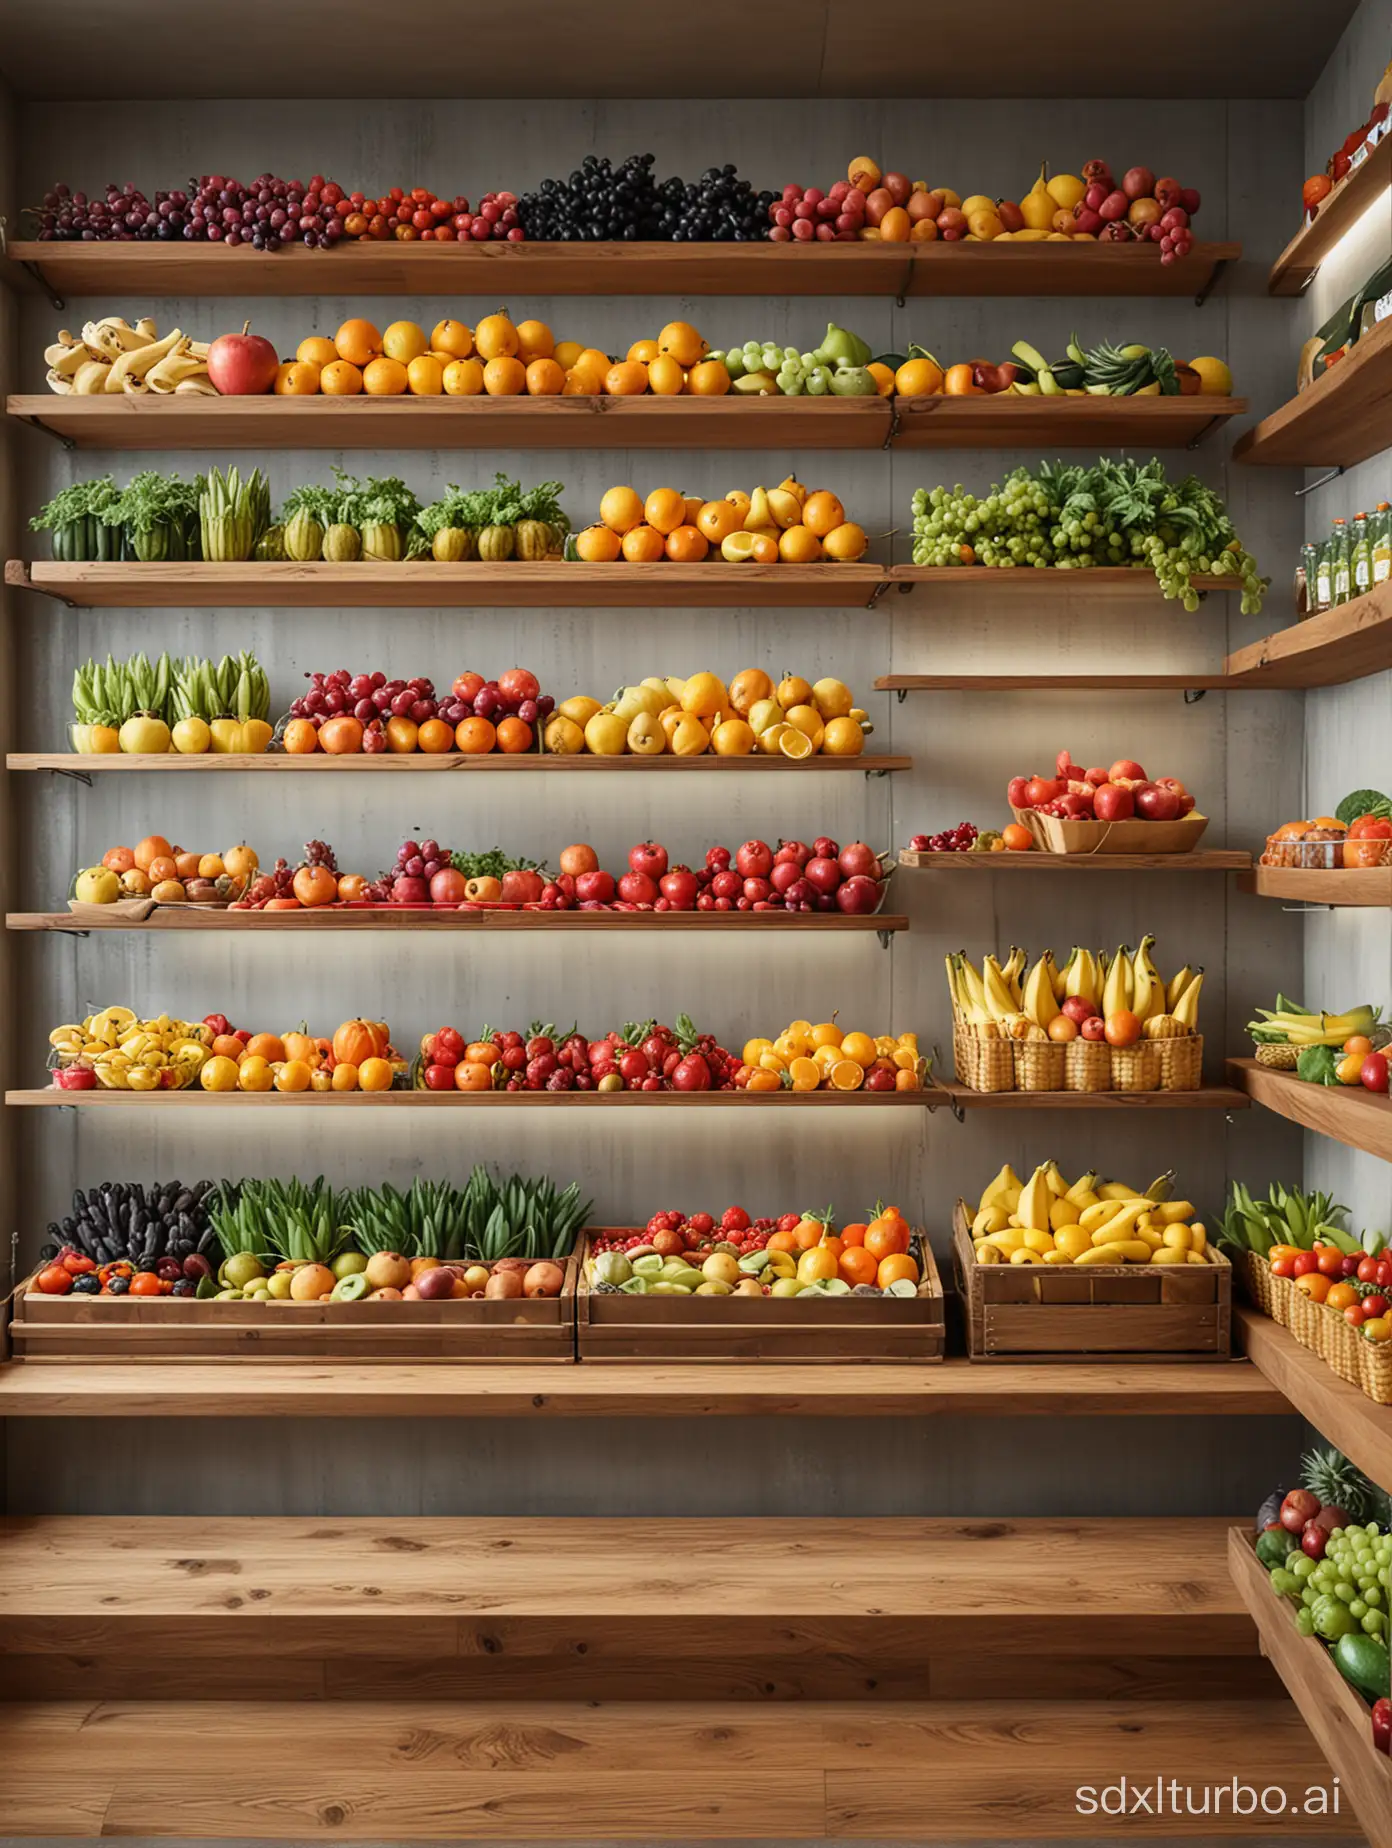 Abundant-Fruit-Display-on-Shelves-Realistic-Still-Life-Composition